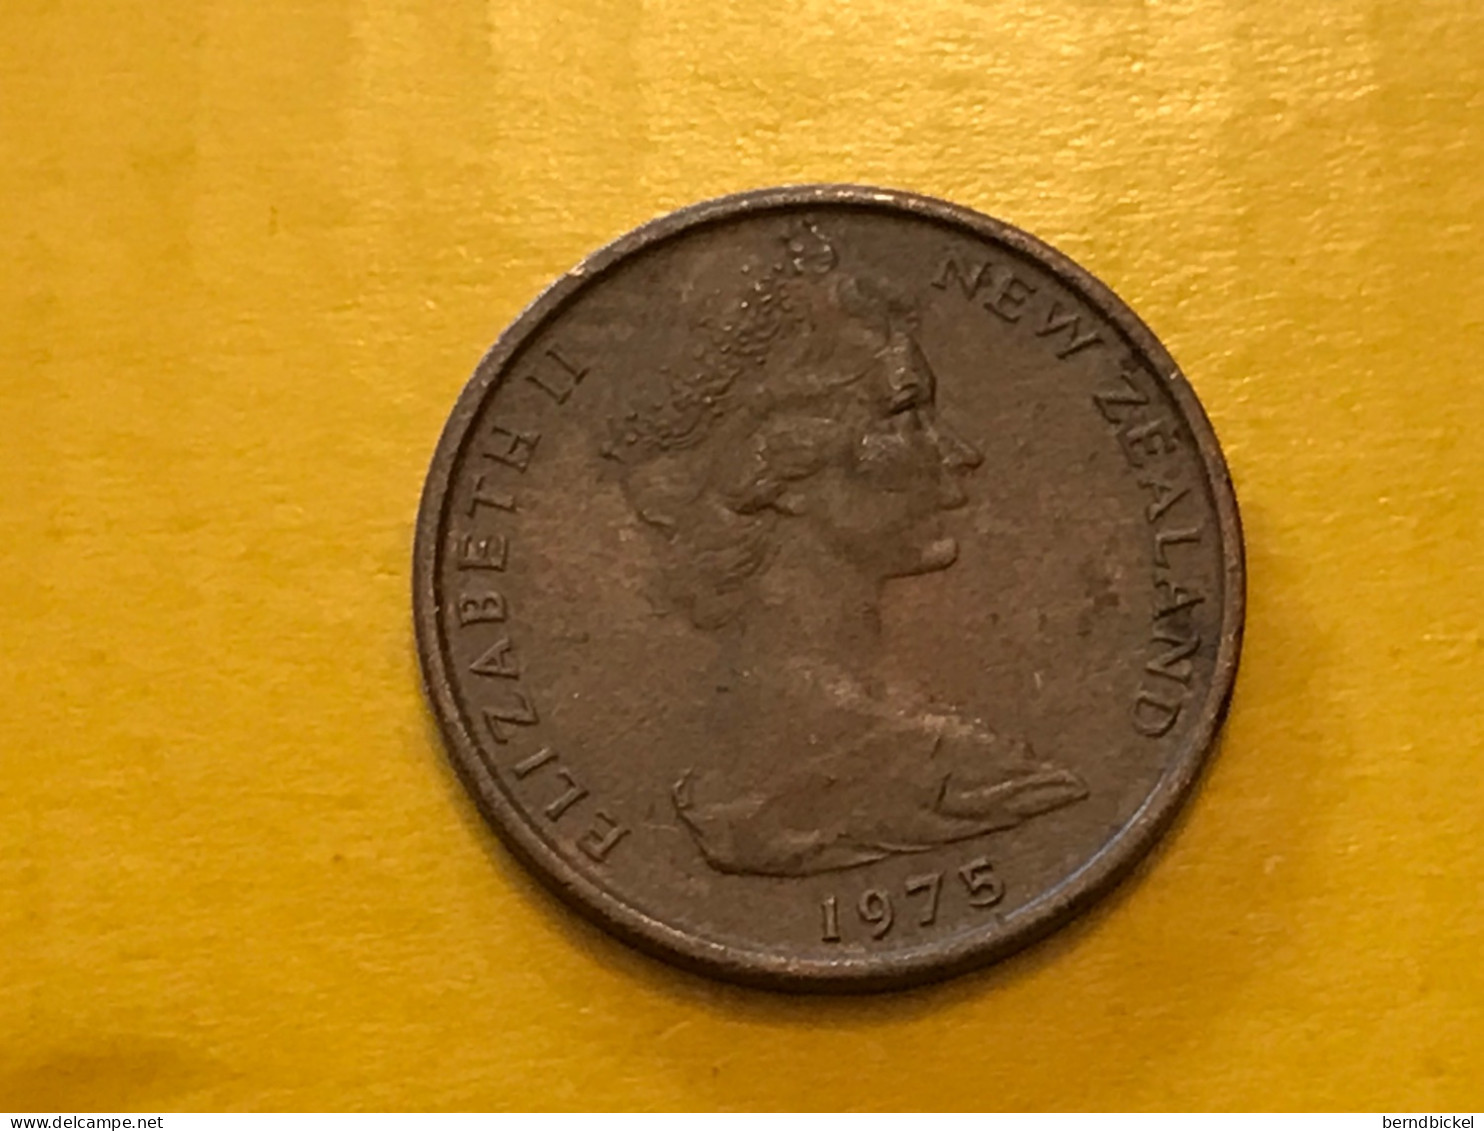 Münze Münzen Umlaufmünze Neuseeland 1 Cent 1975 - Nieuw-Zeeland